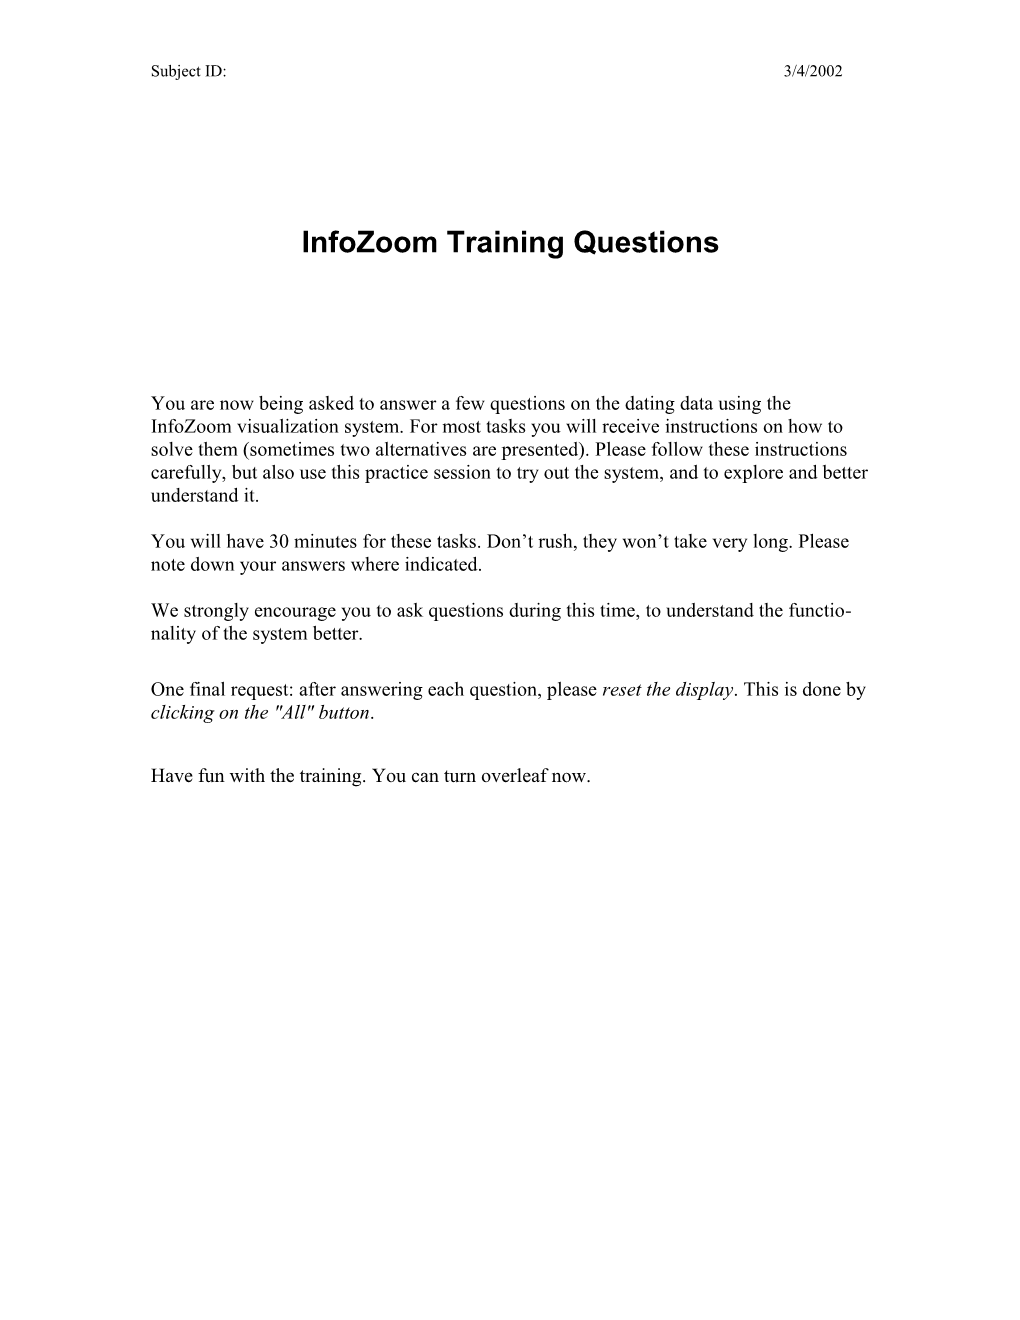 Infozoom Training Questions